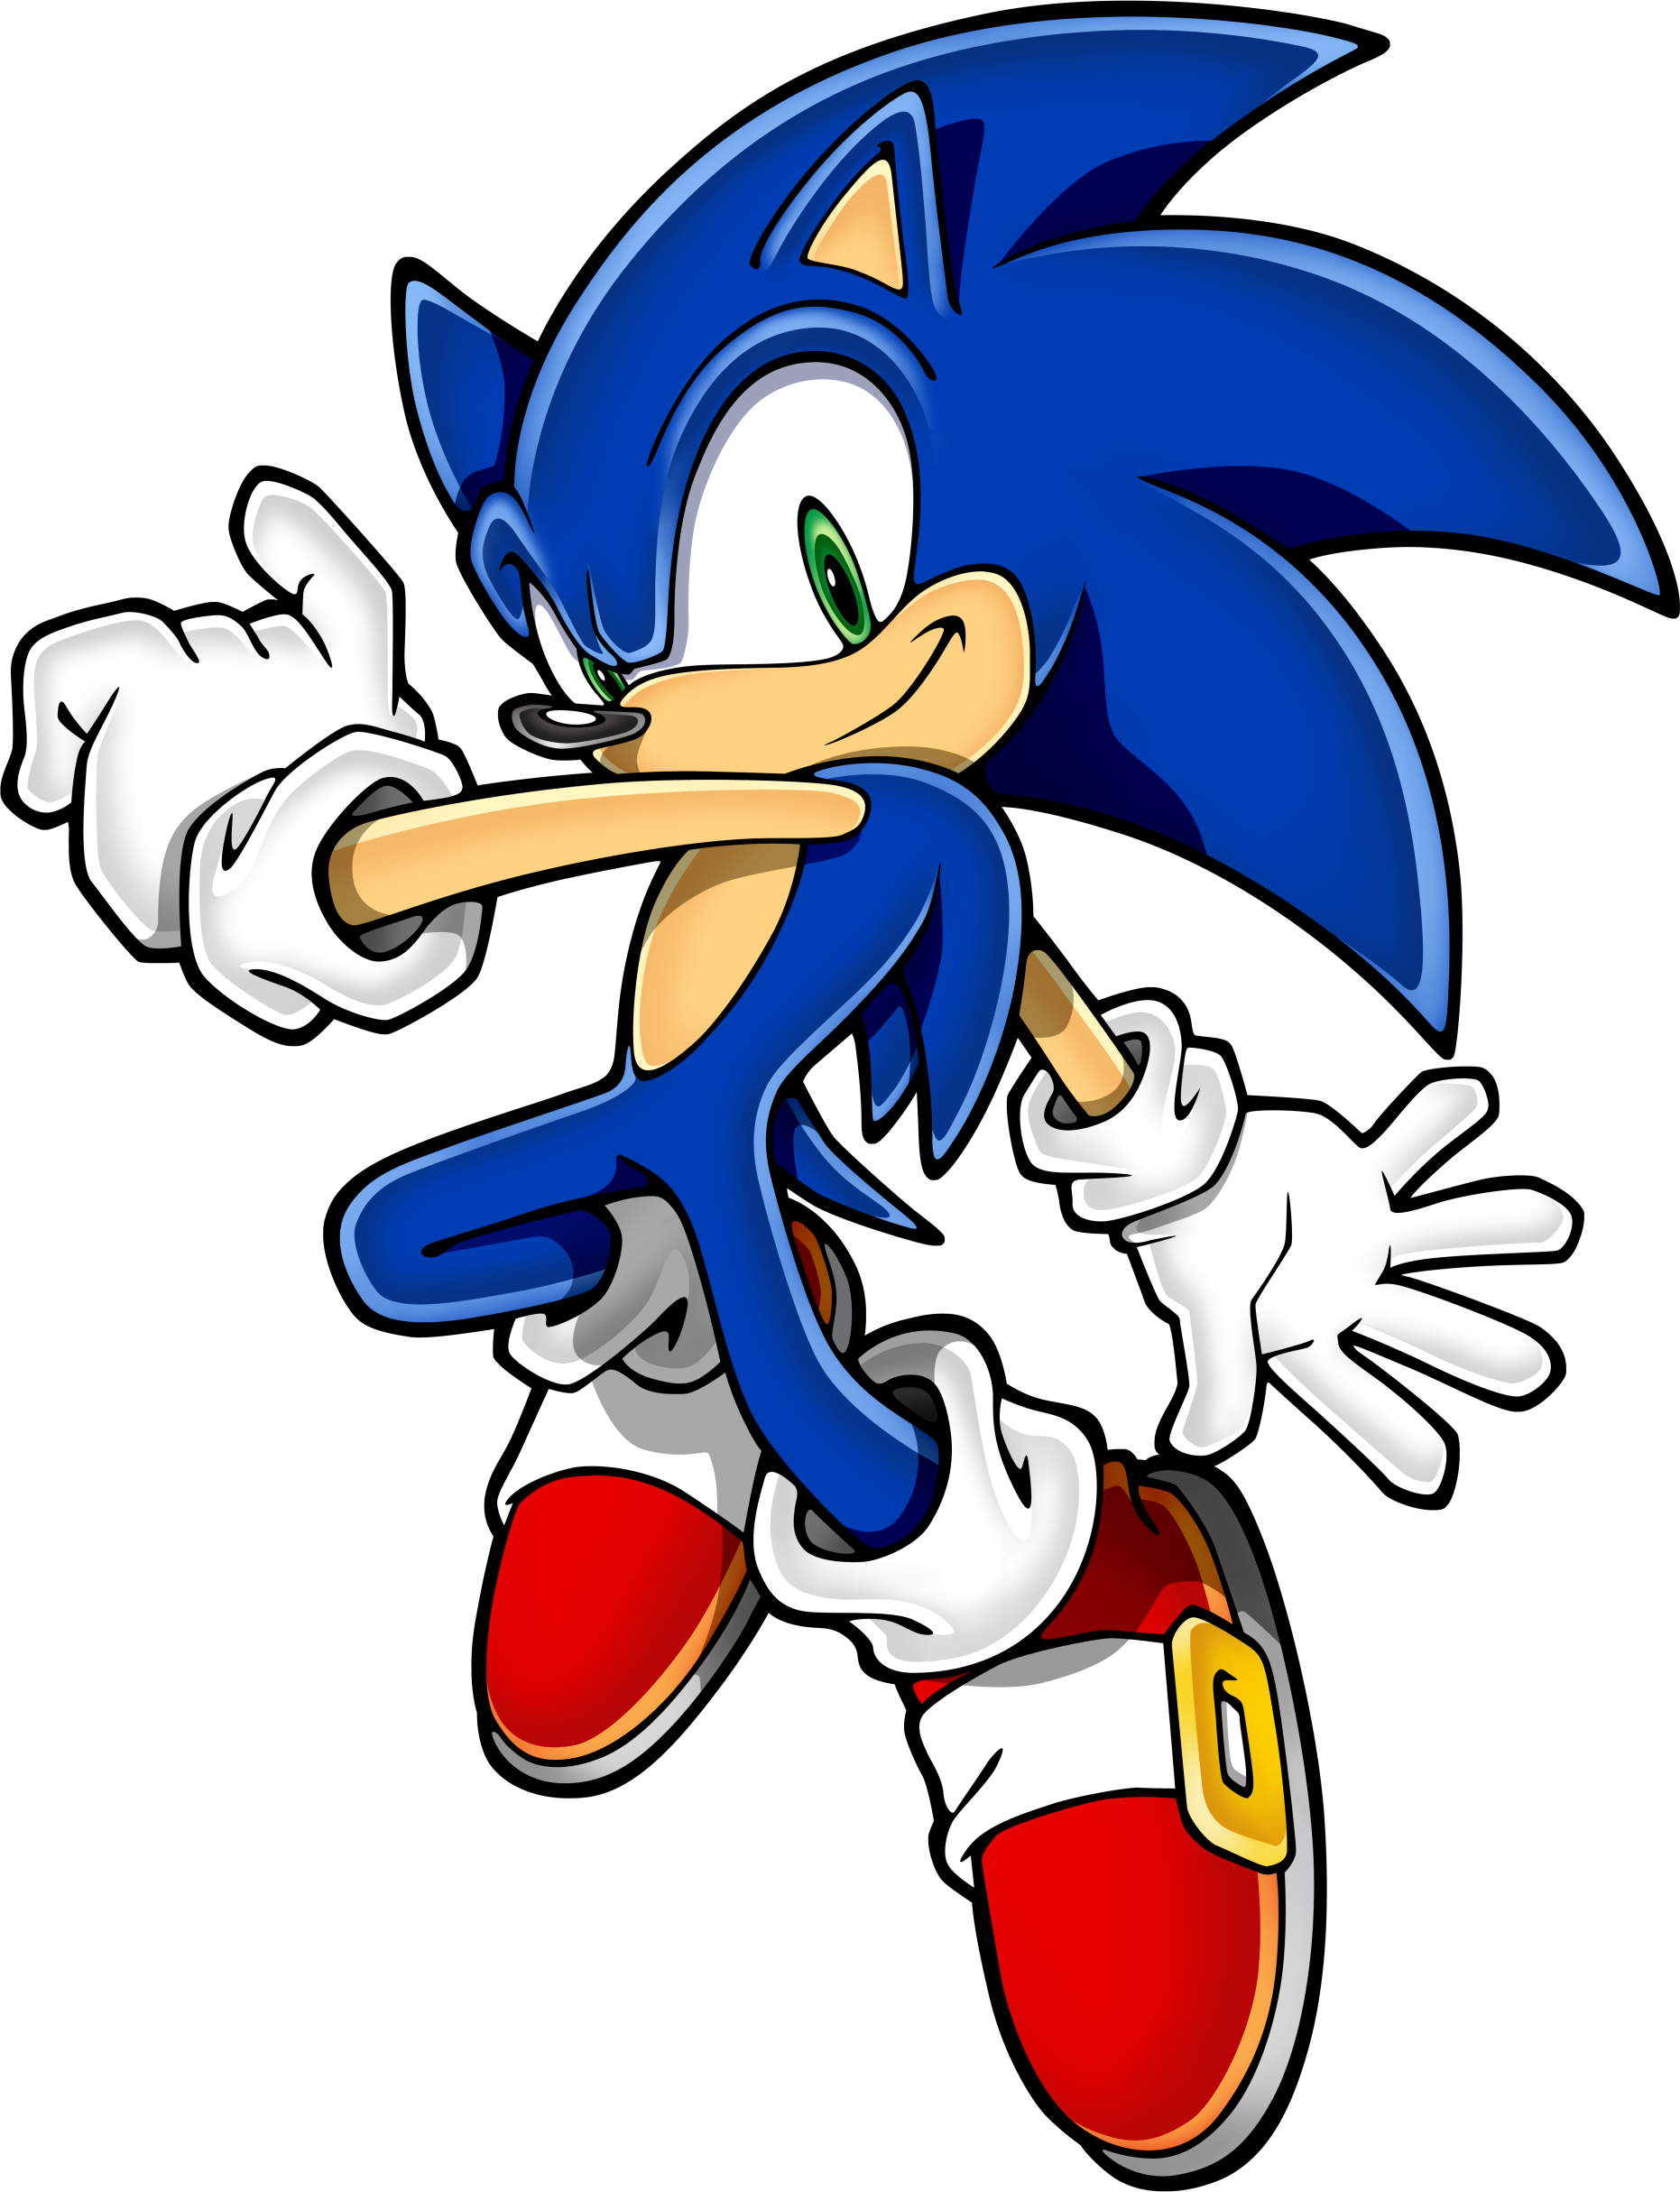 Sonic The Hedgehog HD, Sonic Fanon Wiki